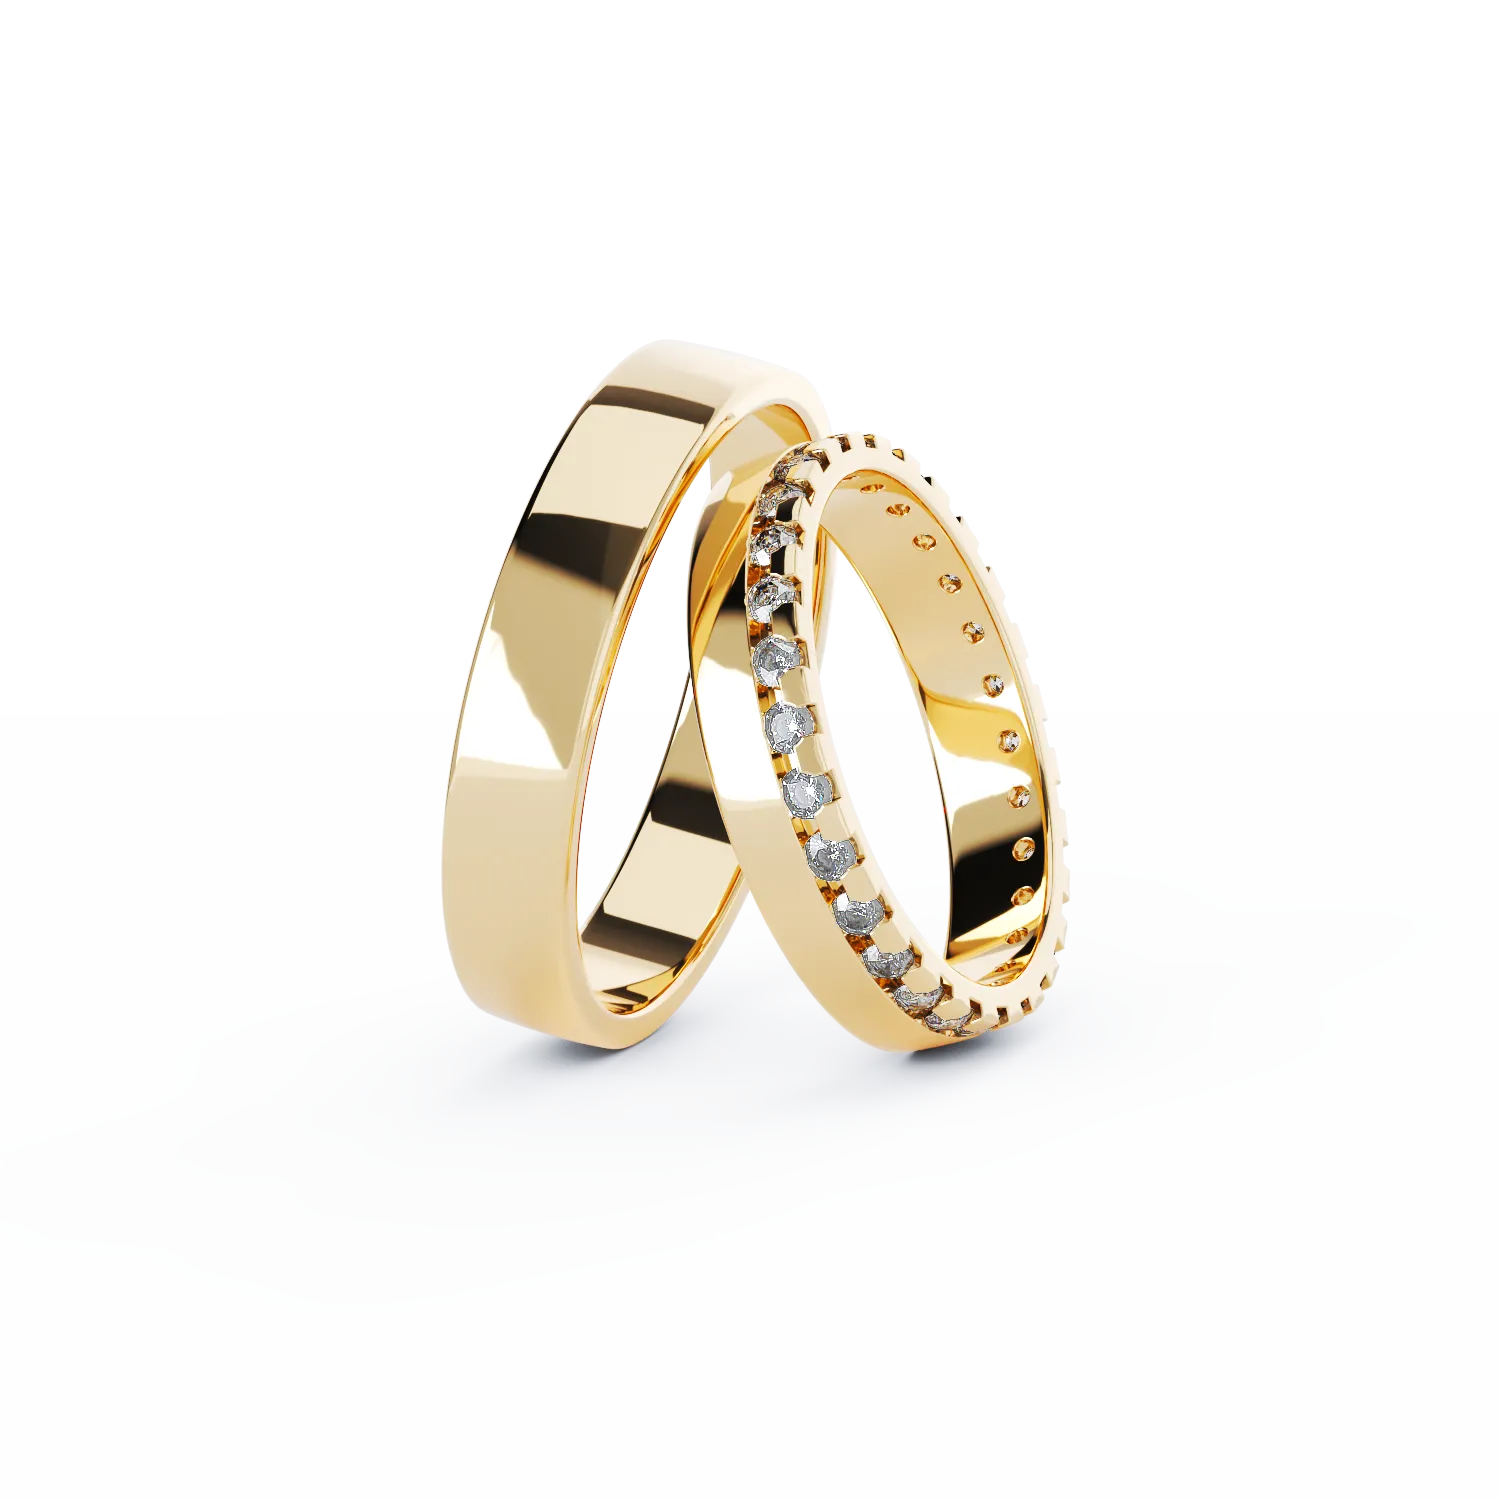 HALO gold wedding rings